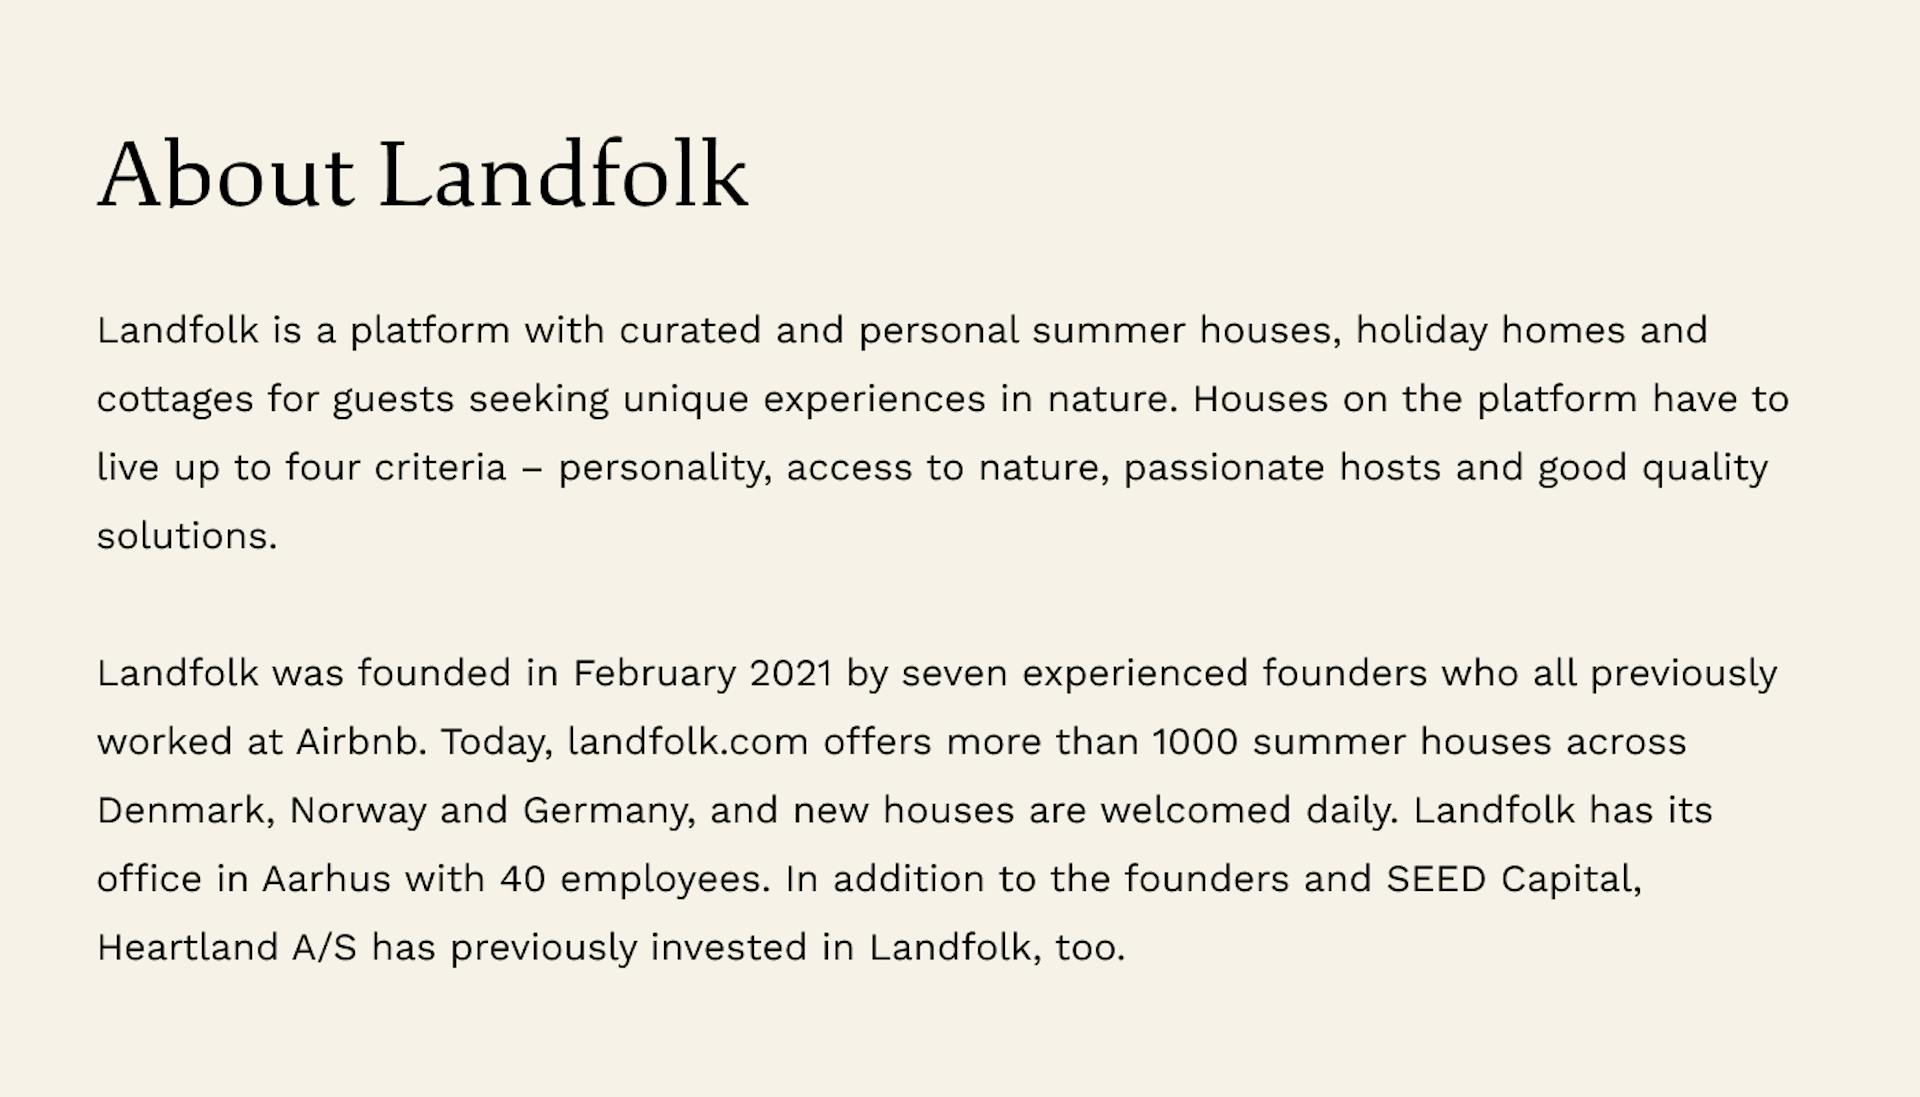 About Landfolk